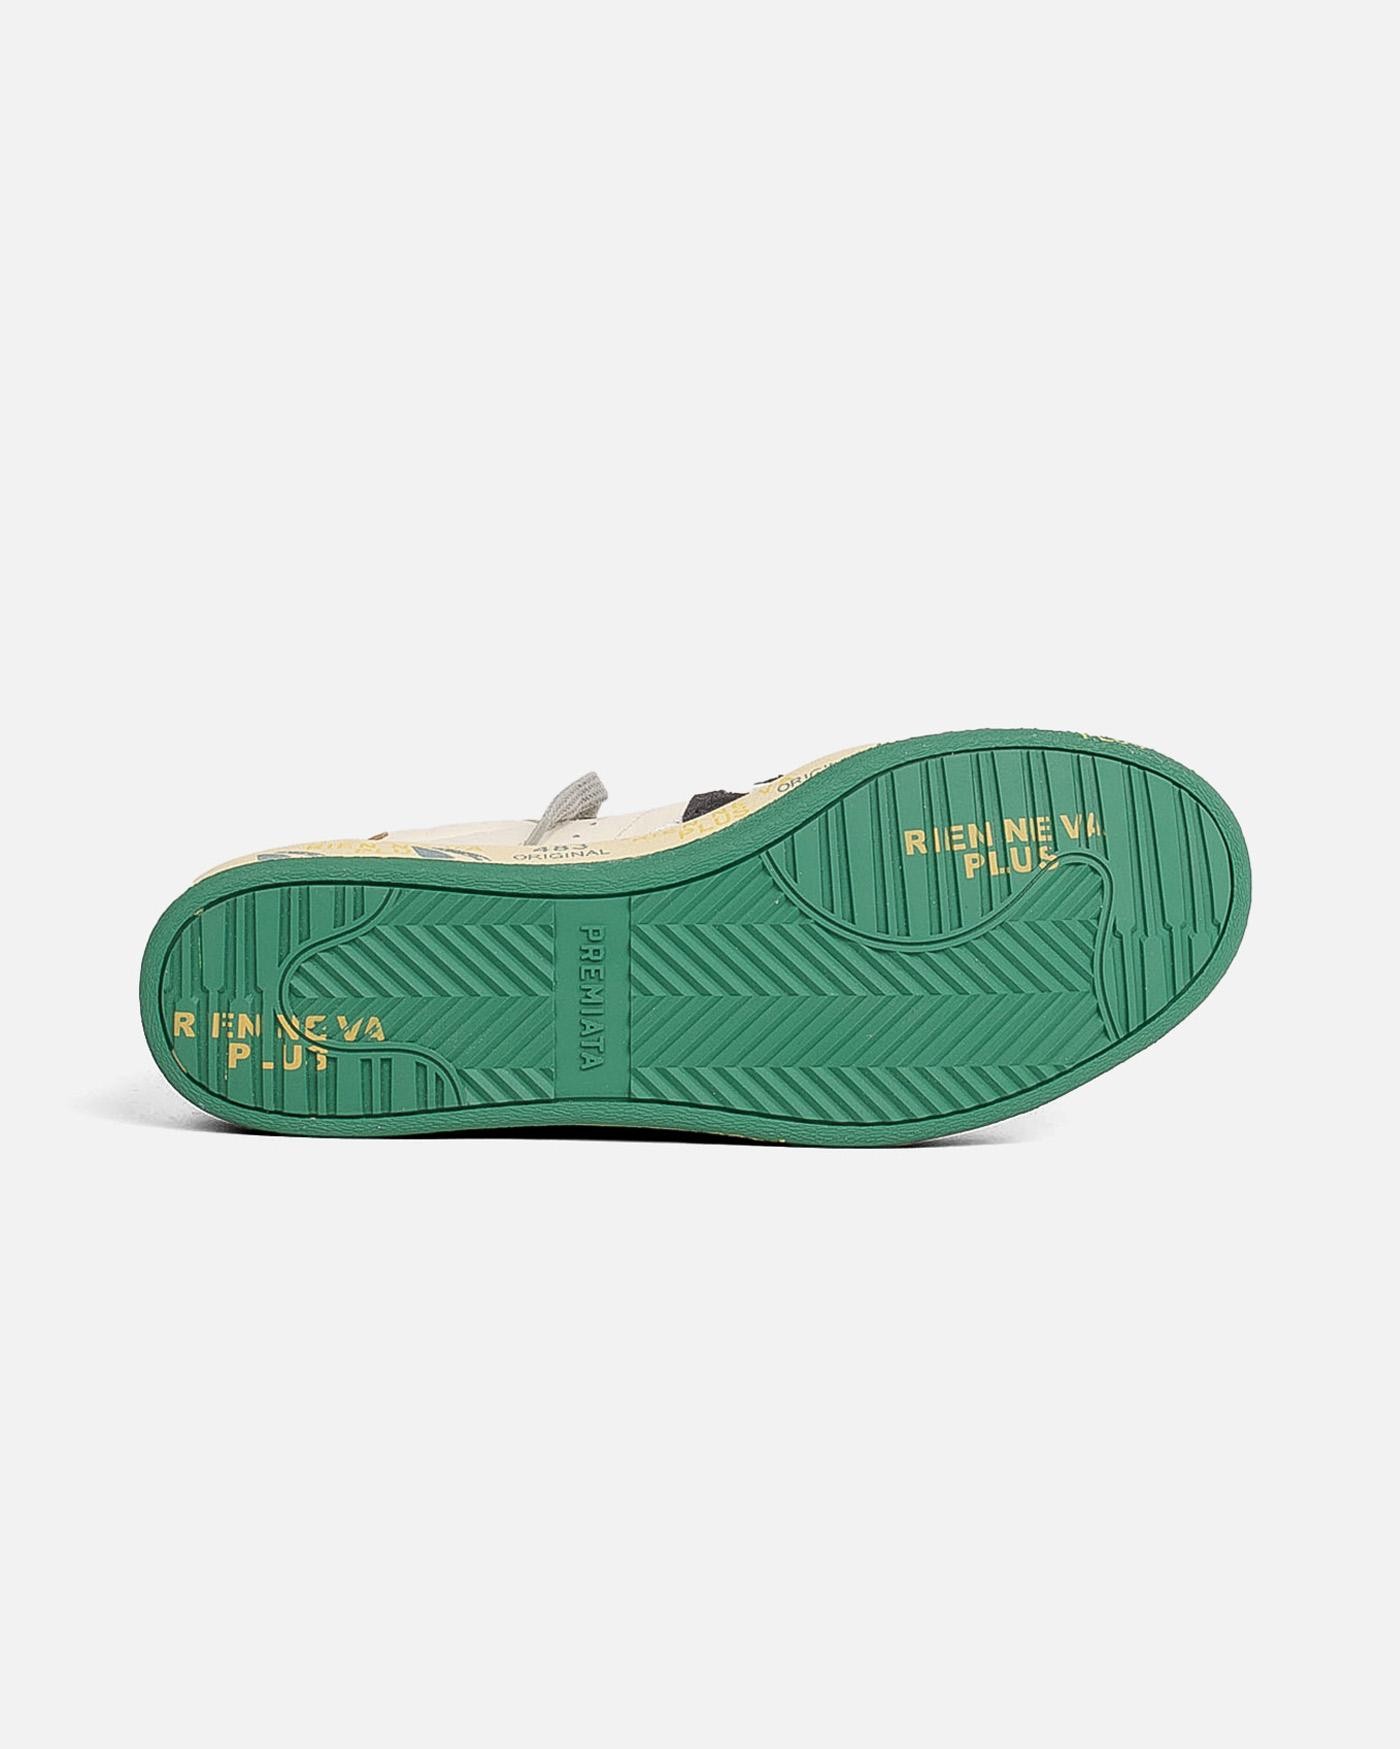 premiata-zapatillas-basket-clay-var-6778-sneakers-white-blancas-3